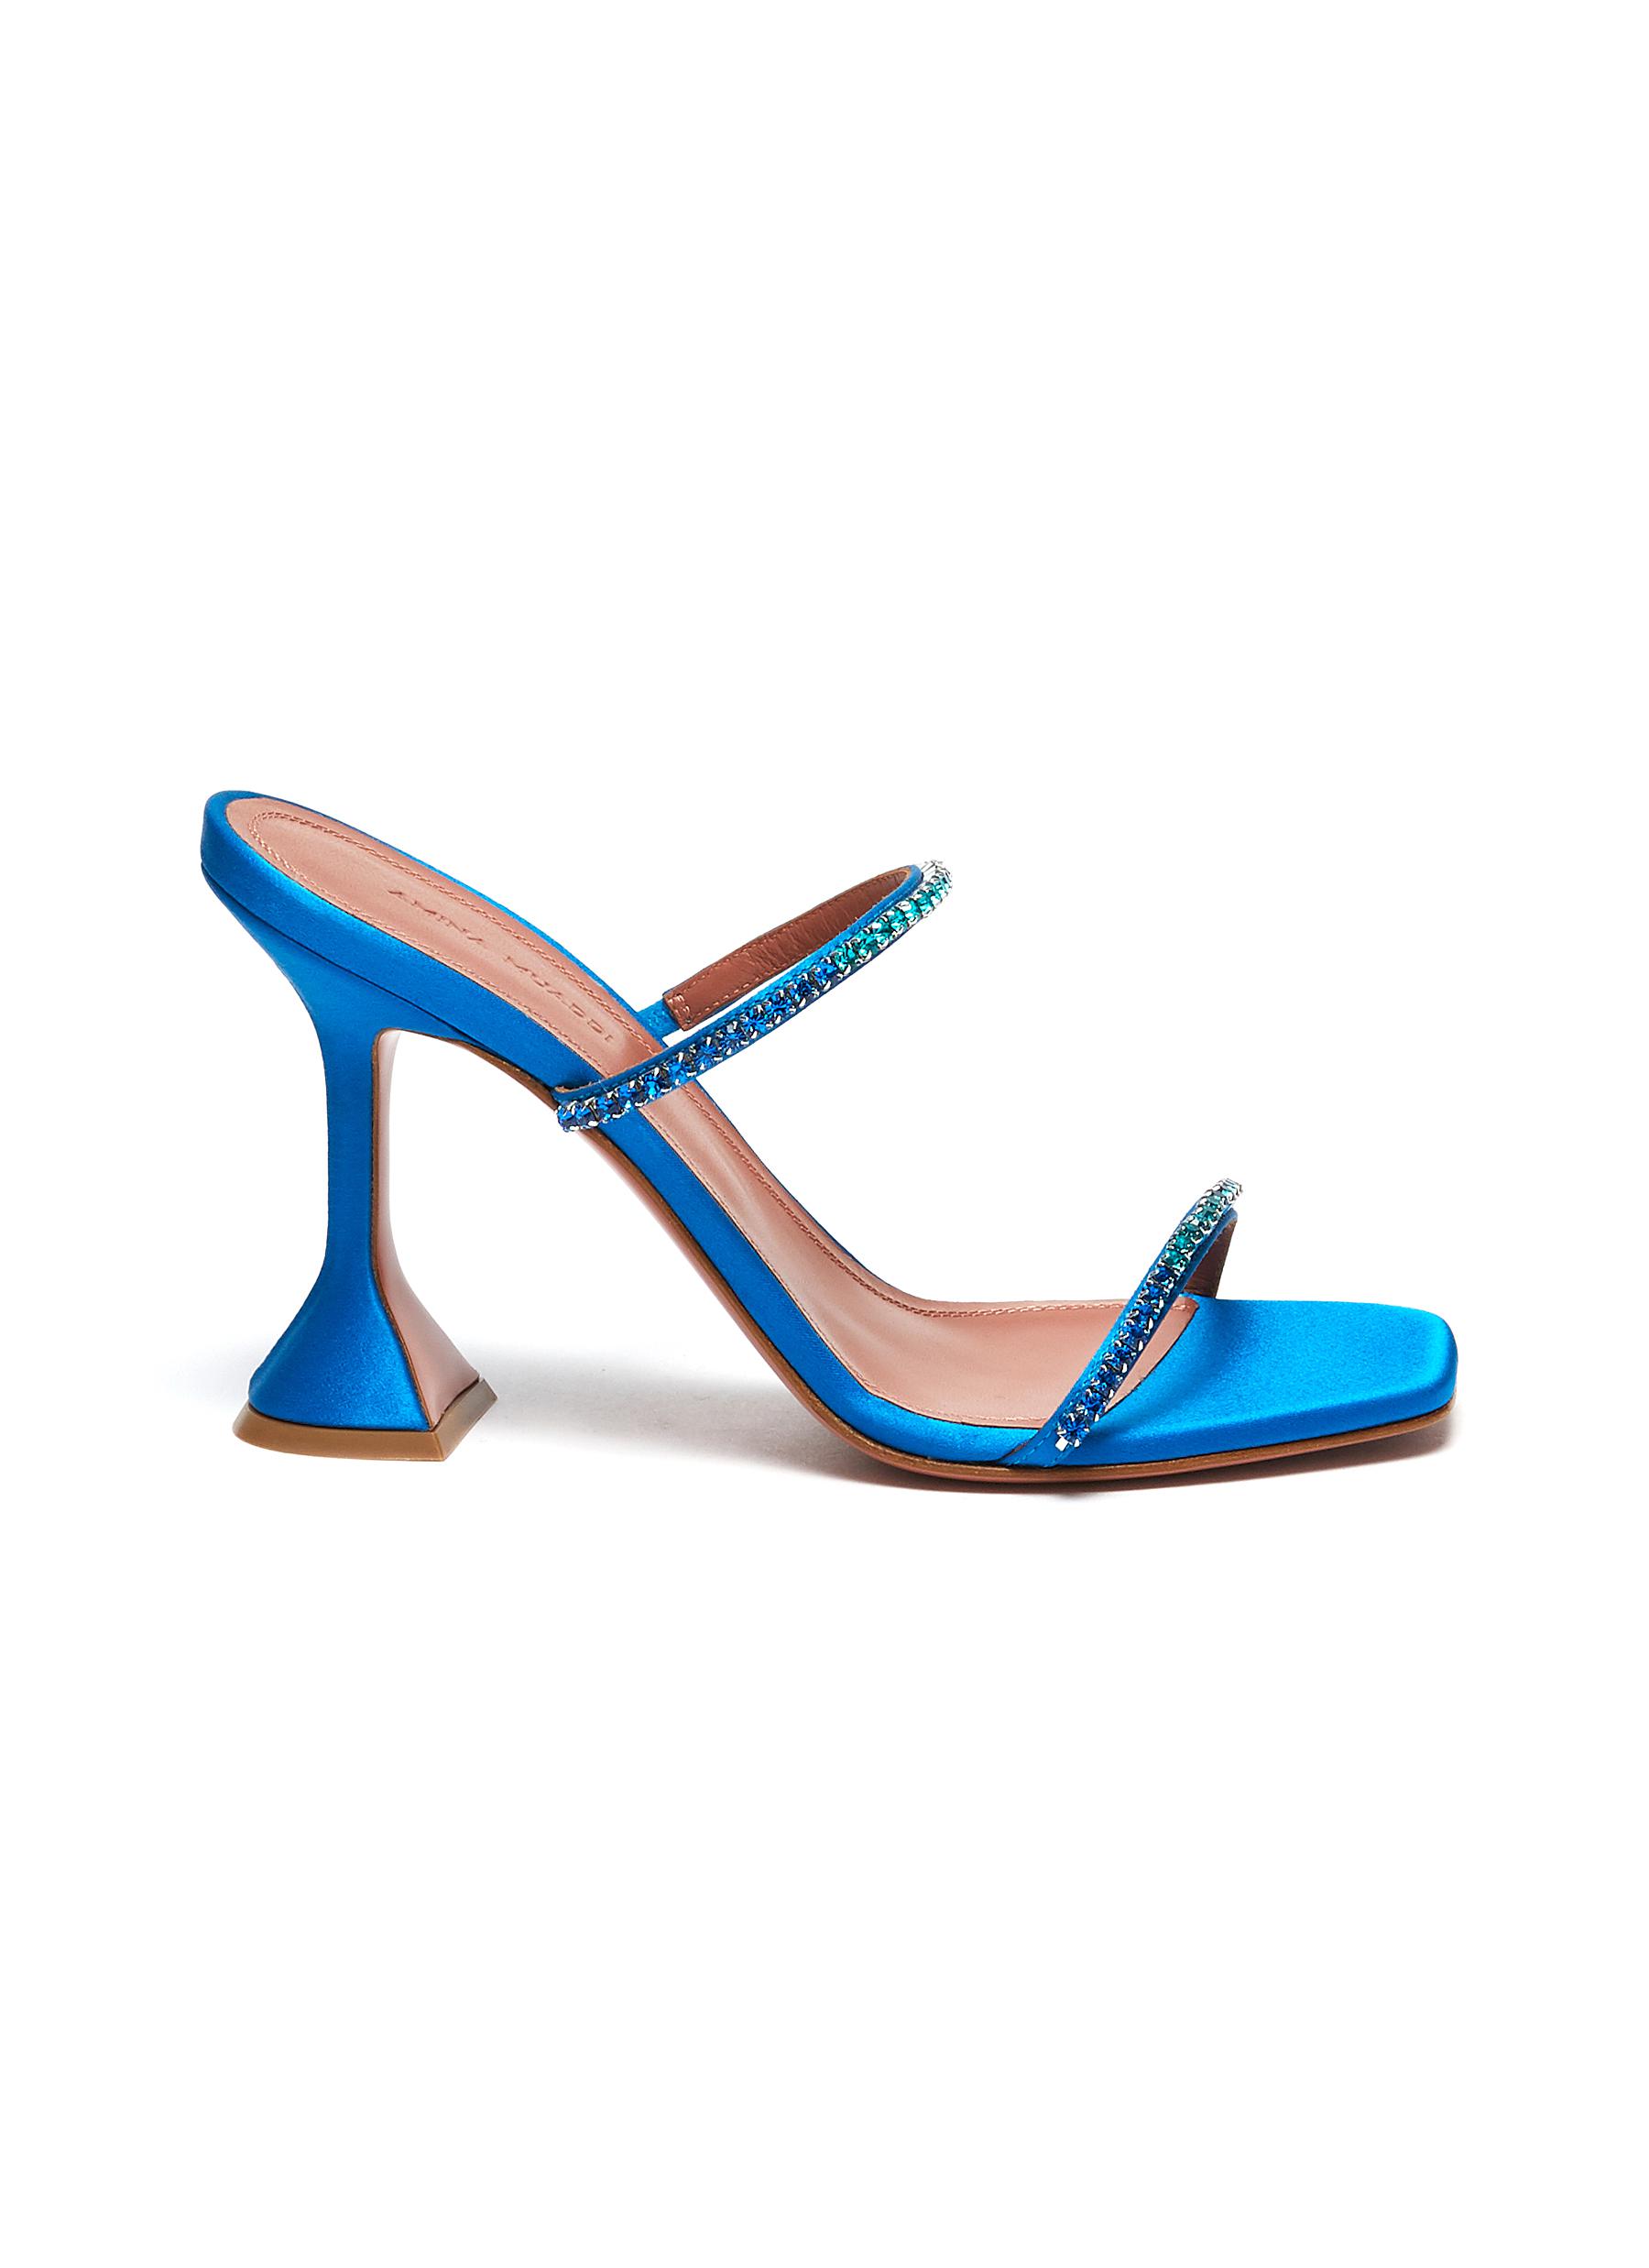 Amina Muaddi Gilda Crystal-embellished Satin Sandals In Blue 